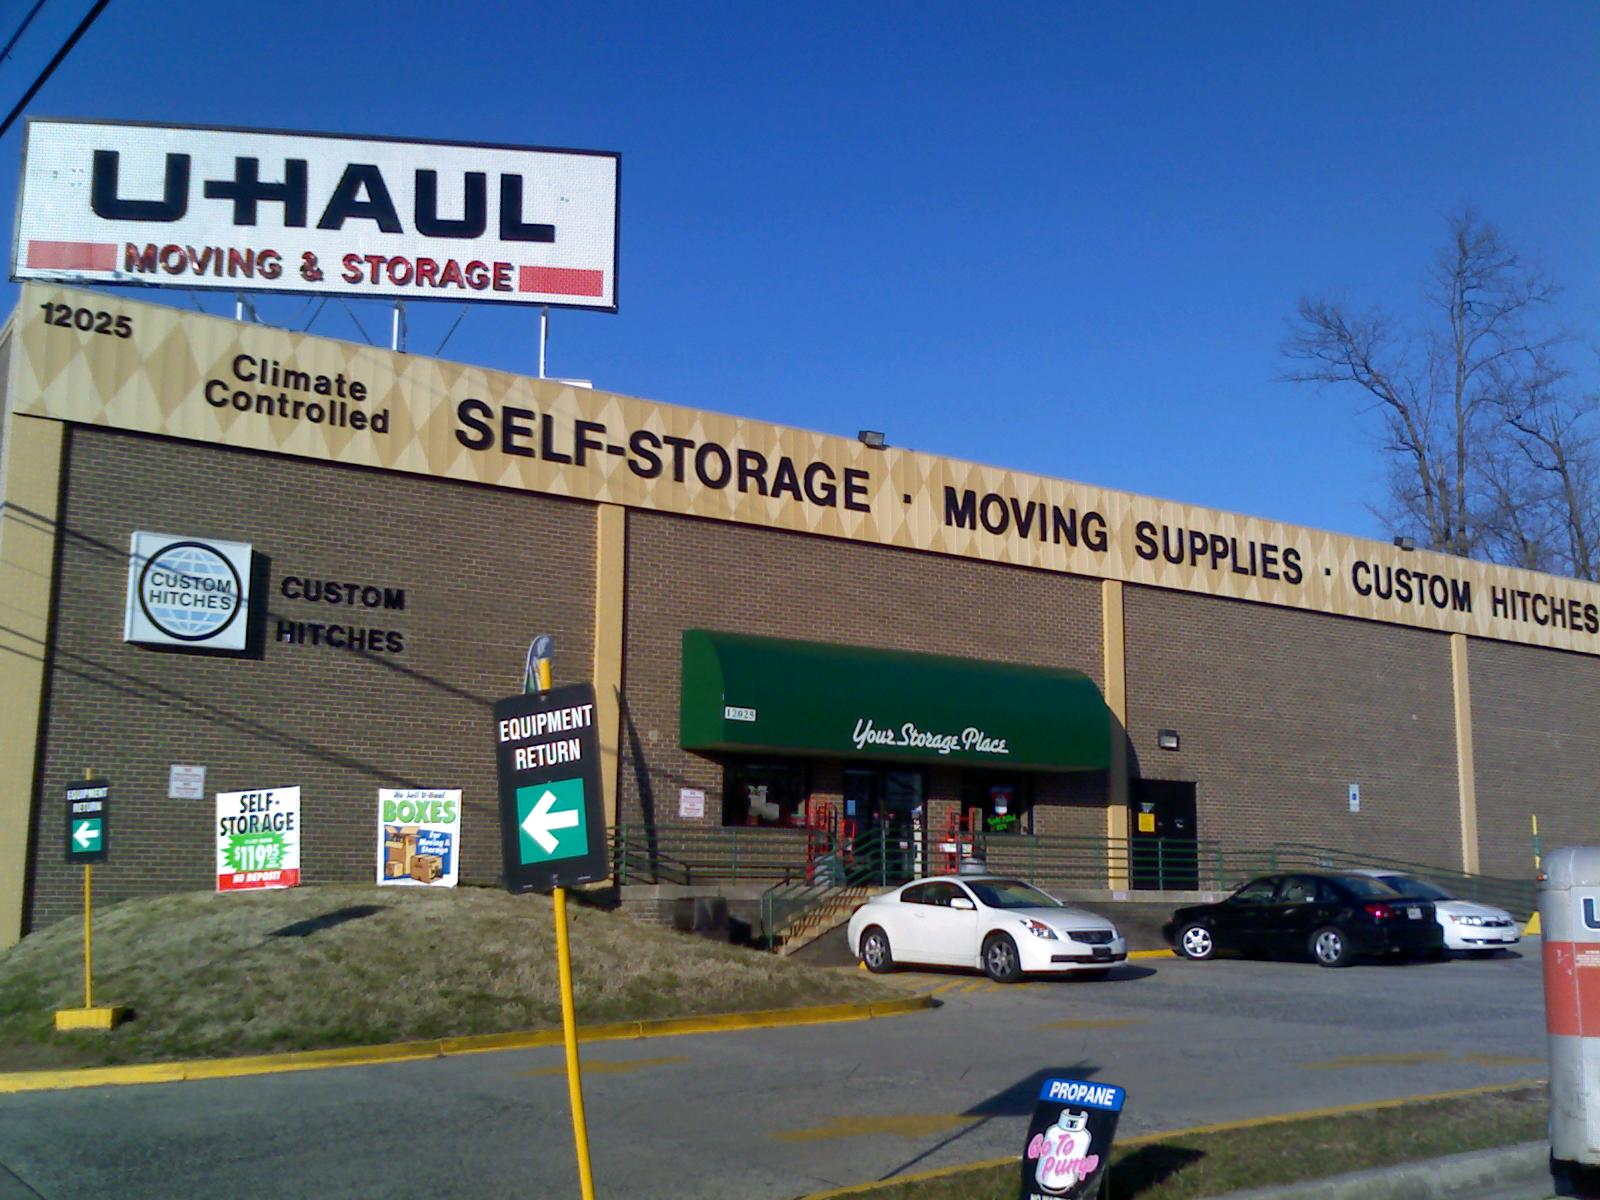 U-Haul Moving & Storage at Randolph Rd